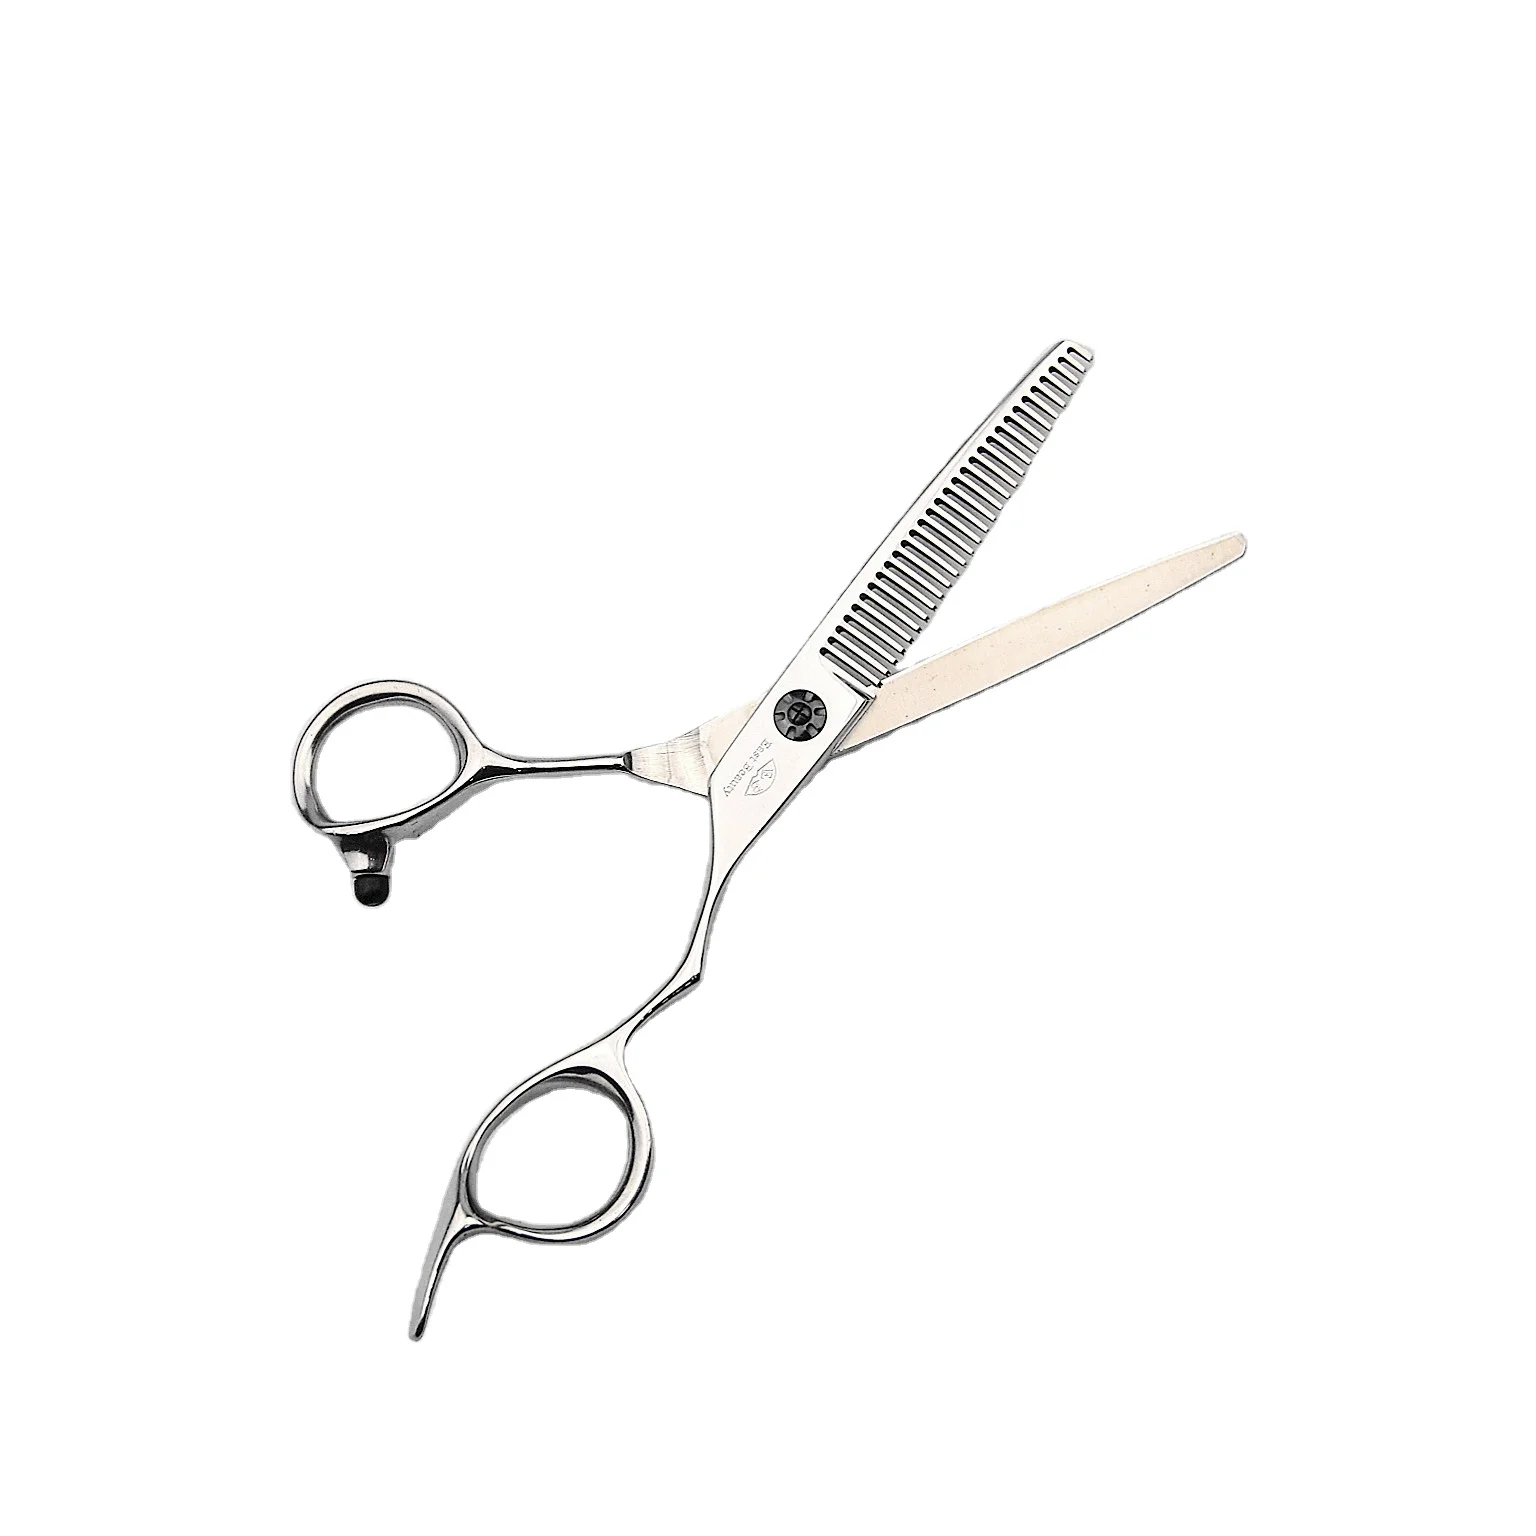 

Marigold barber scissors set 6.0 inch hair scissors hairdressing tijeras de peluquero 440c japanese steel scissors set, Silver or other color you wanted